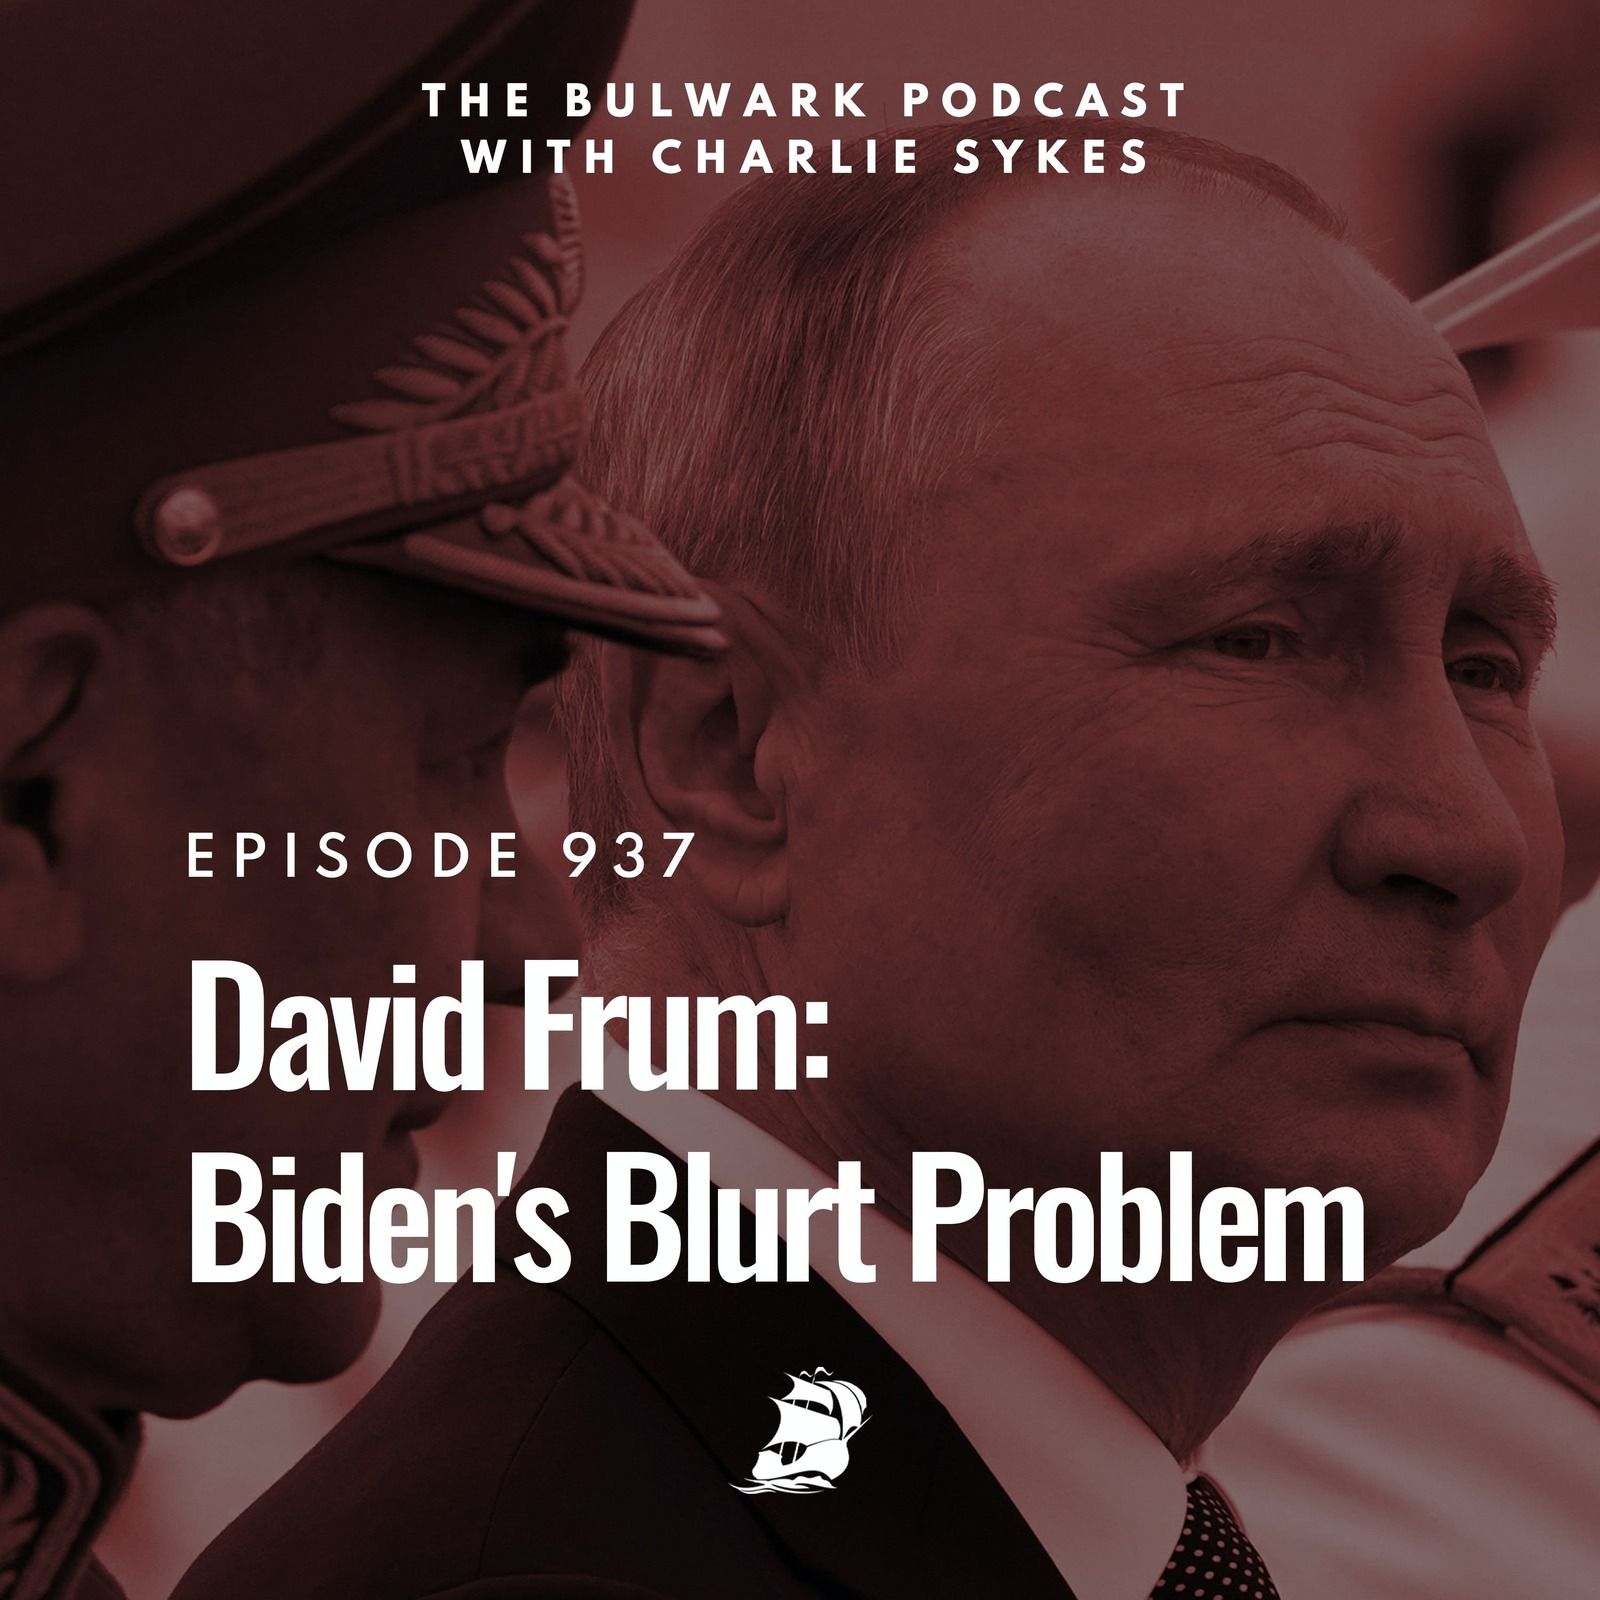 David Frum: Biden's Blurt Problem by The Bulwark Podcast